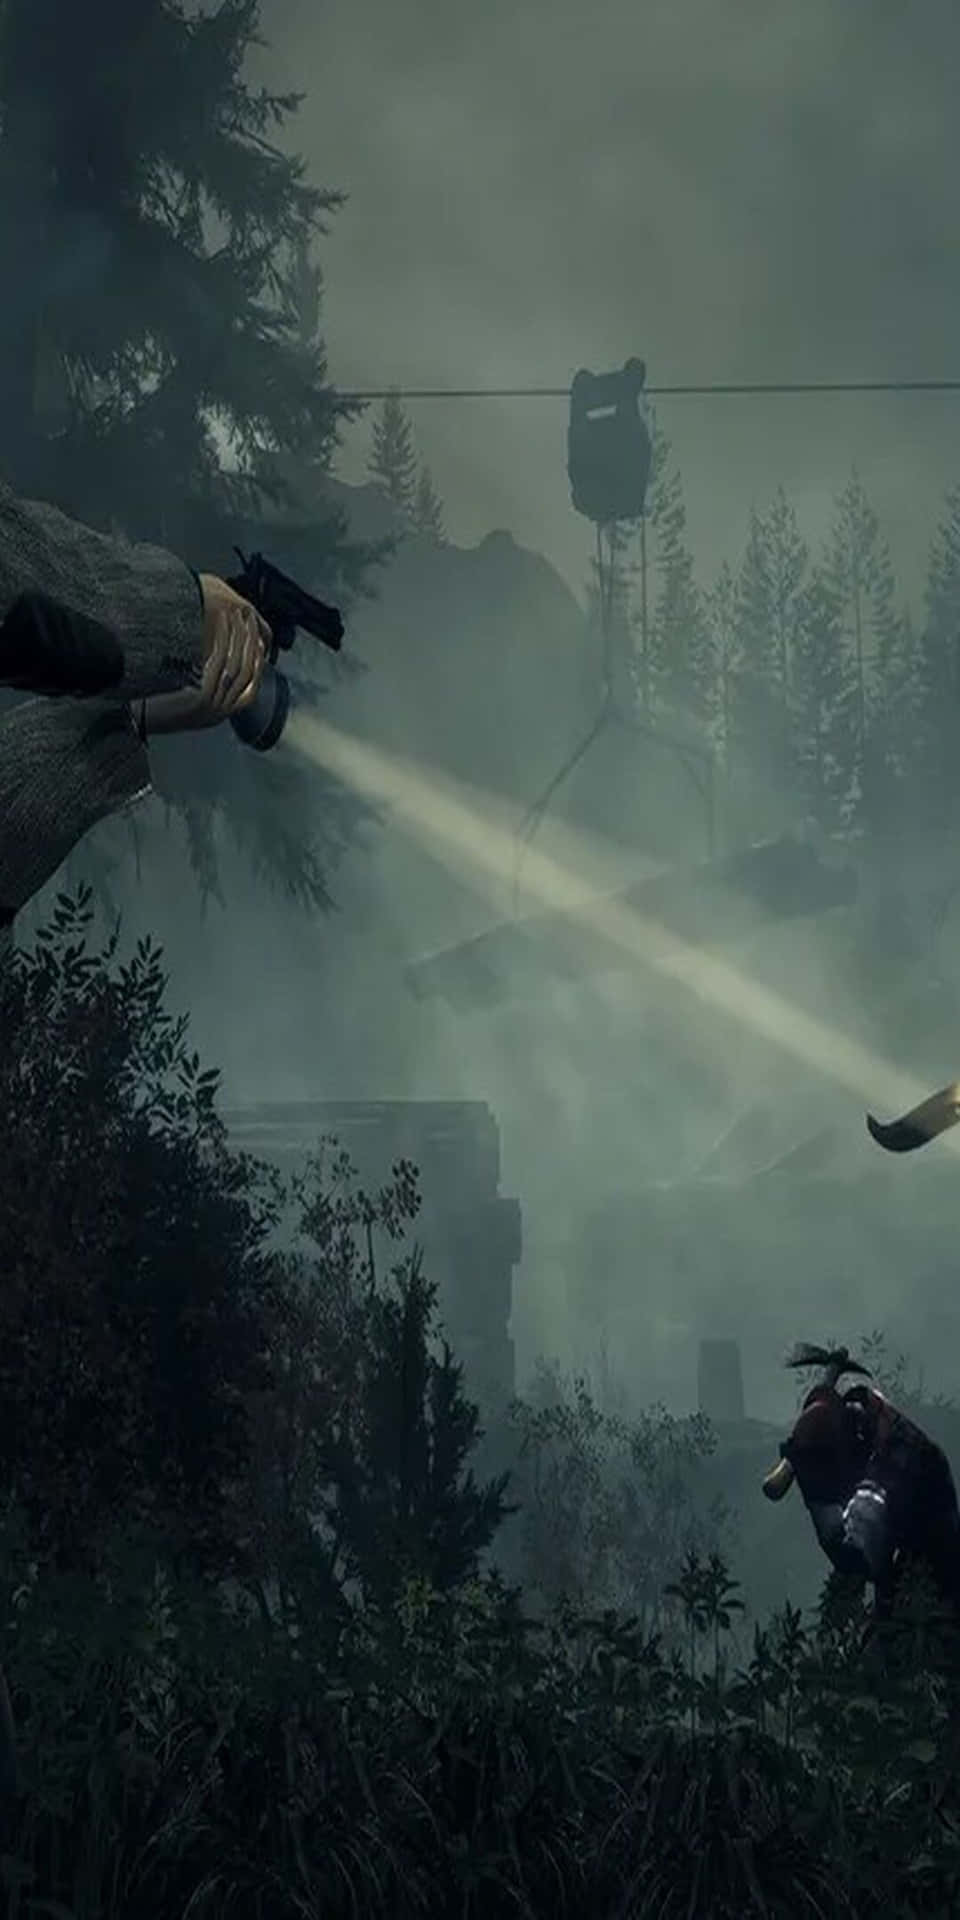 Enman Håller I Ett Vapen I Skogen.